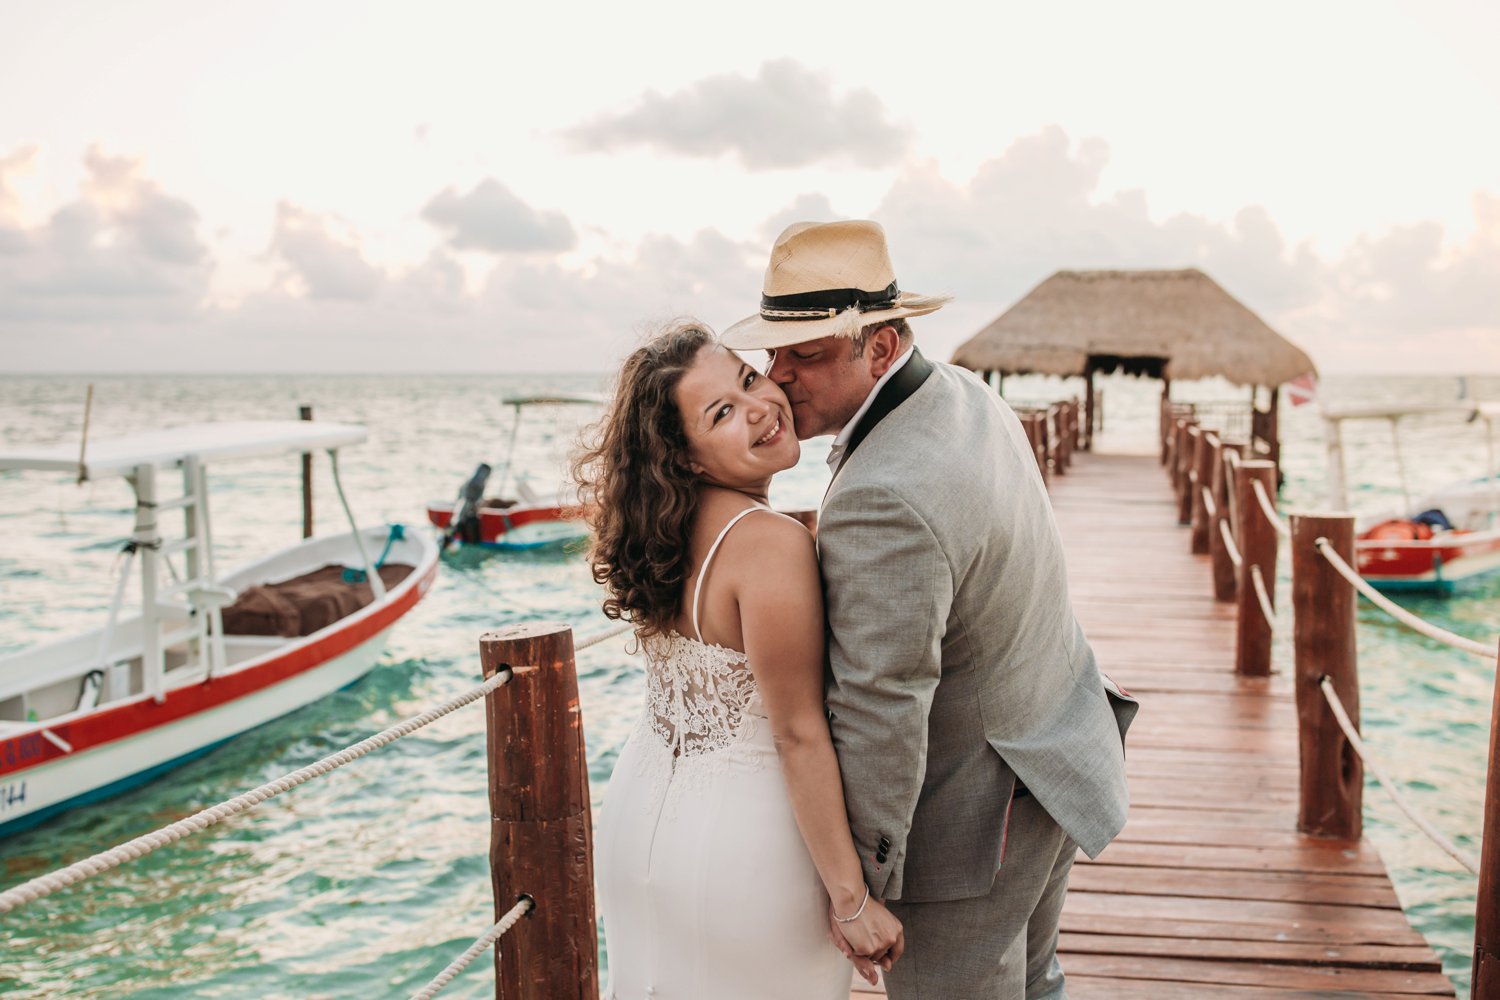  images by feliciathephotographer.com | destination wedding photographer | mexico | tropical | fiji | venue | azul beach resort | riviera maya | bridal portraits | lace dress | grey suit | sunrise | oceanside | romantic | whimsical | cotton candy skies | 